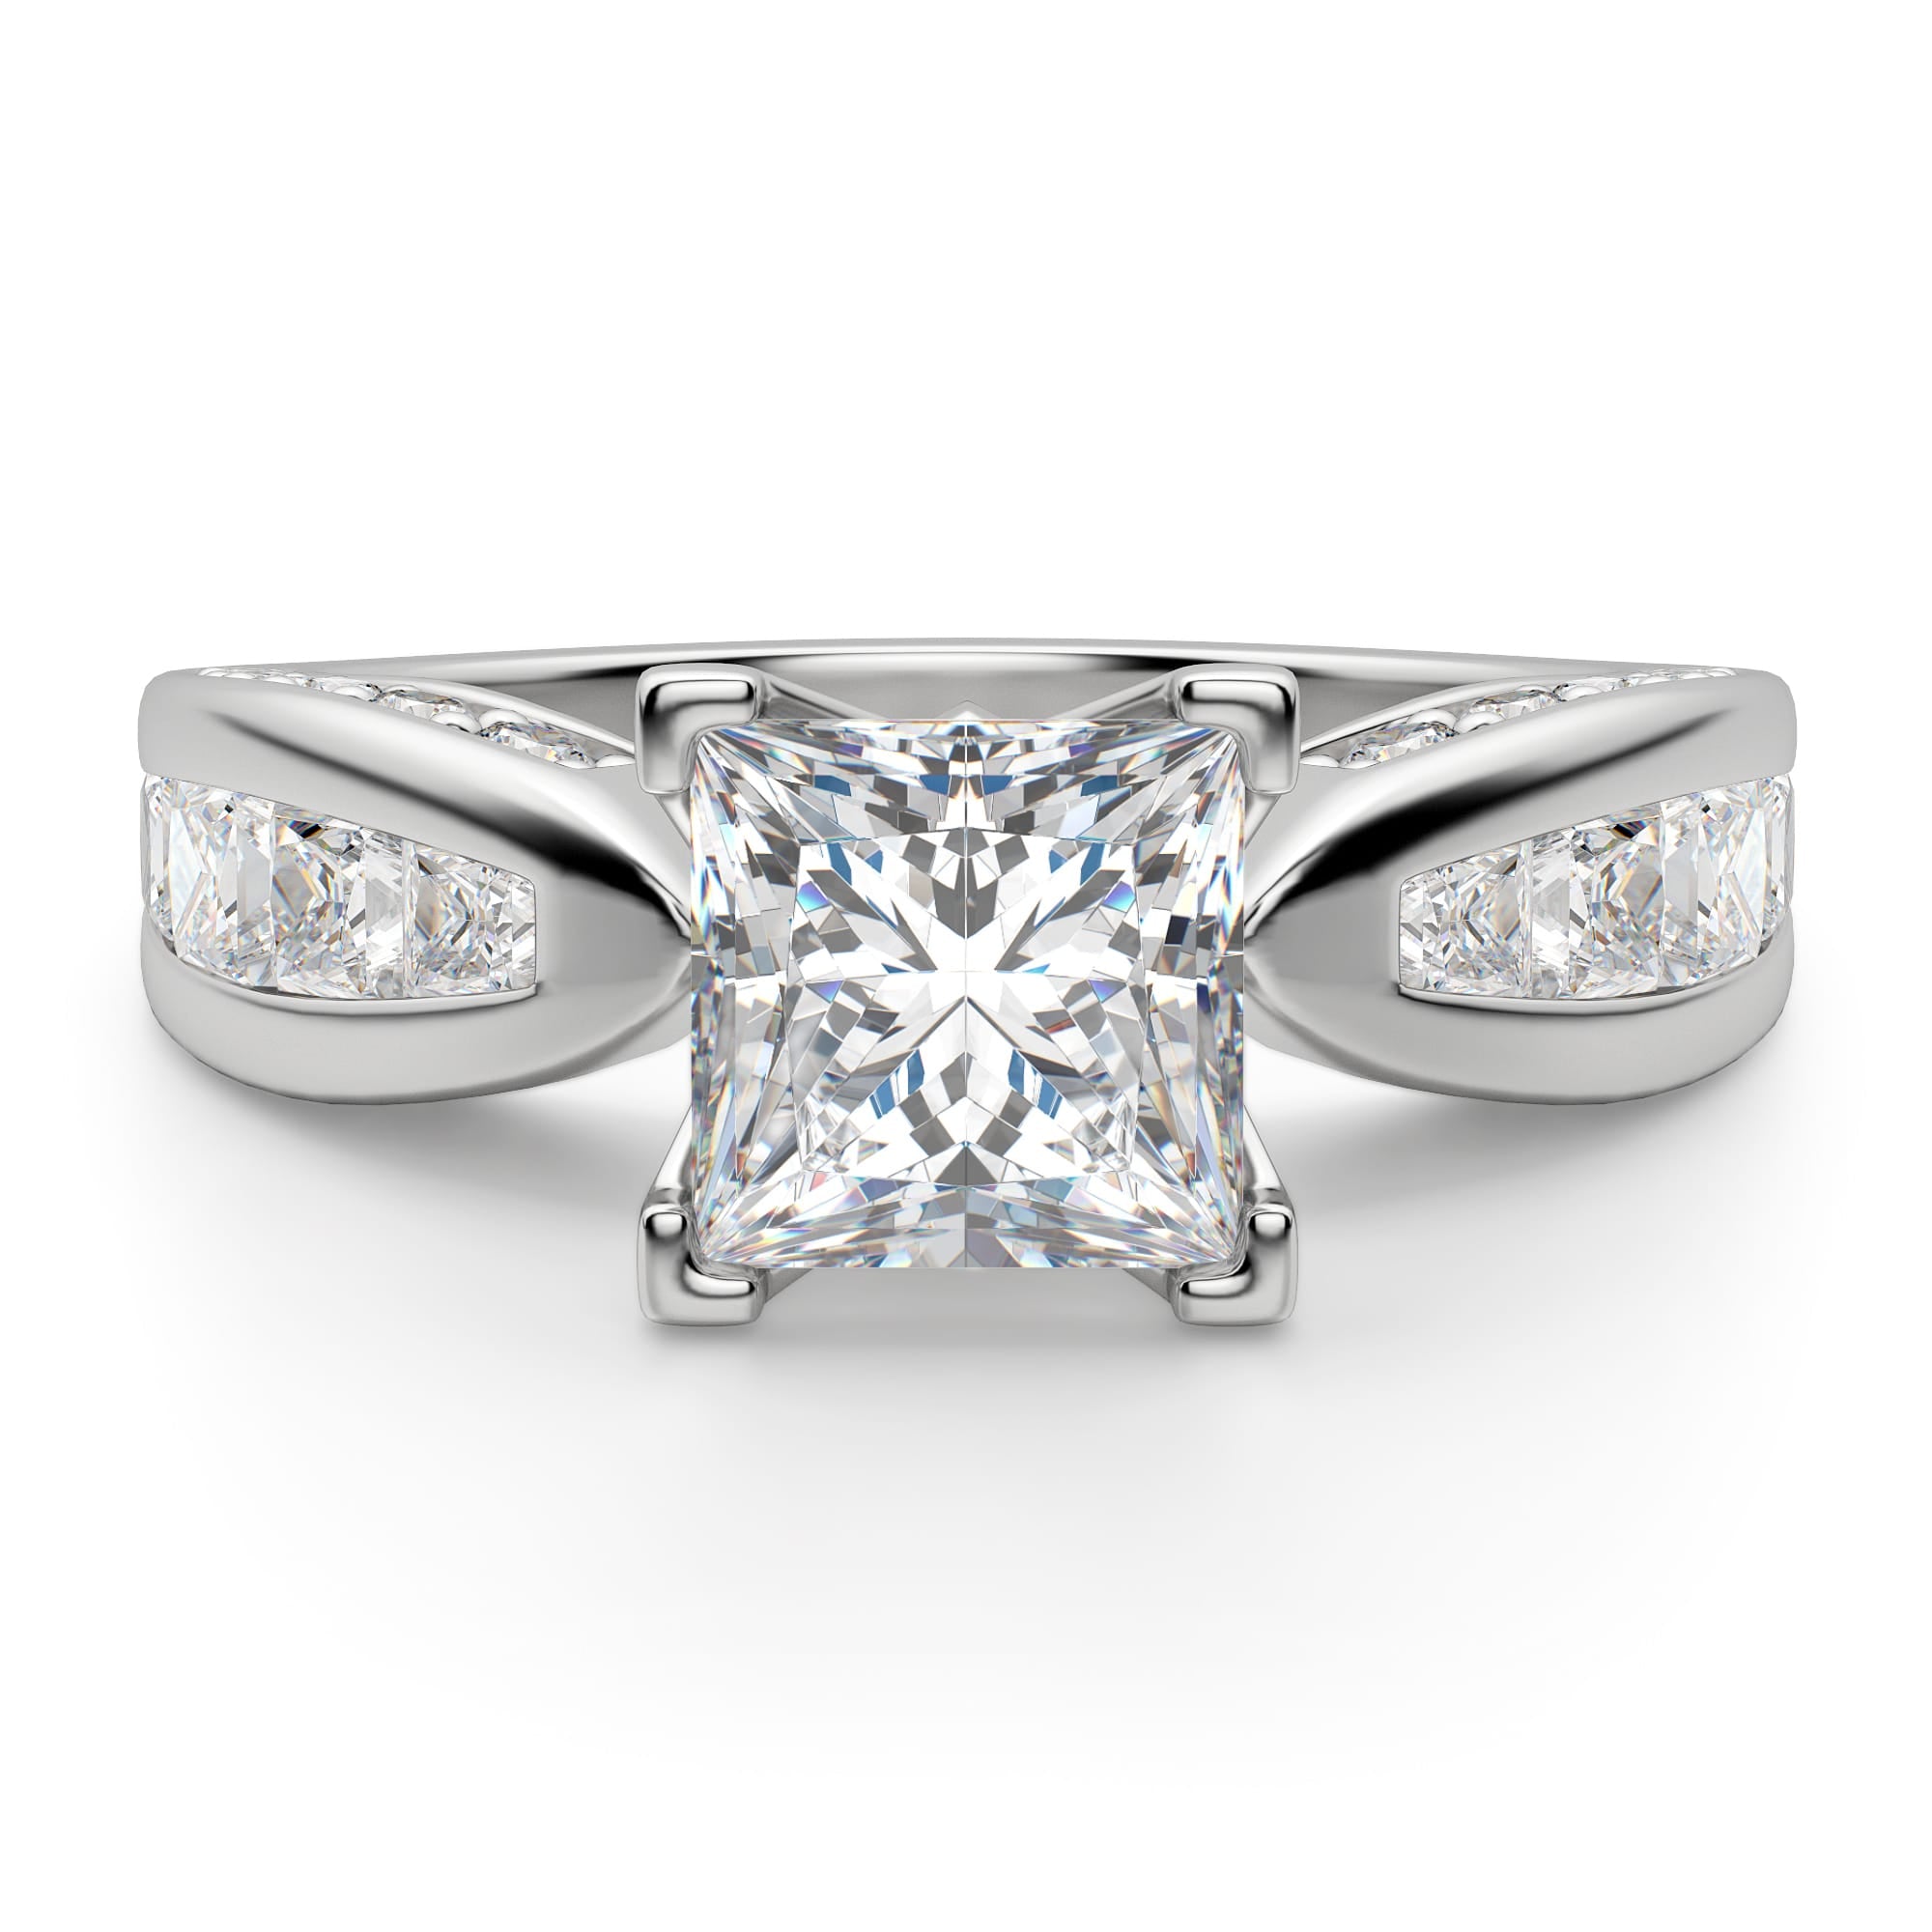 Princess Cut Moissanite Art Deco Wedding Ring